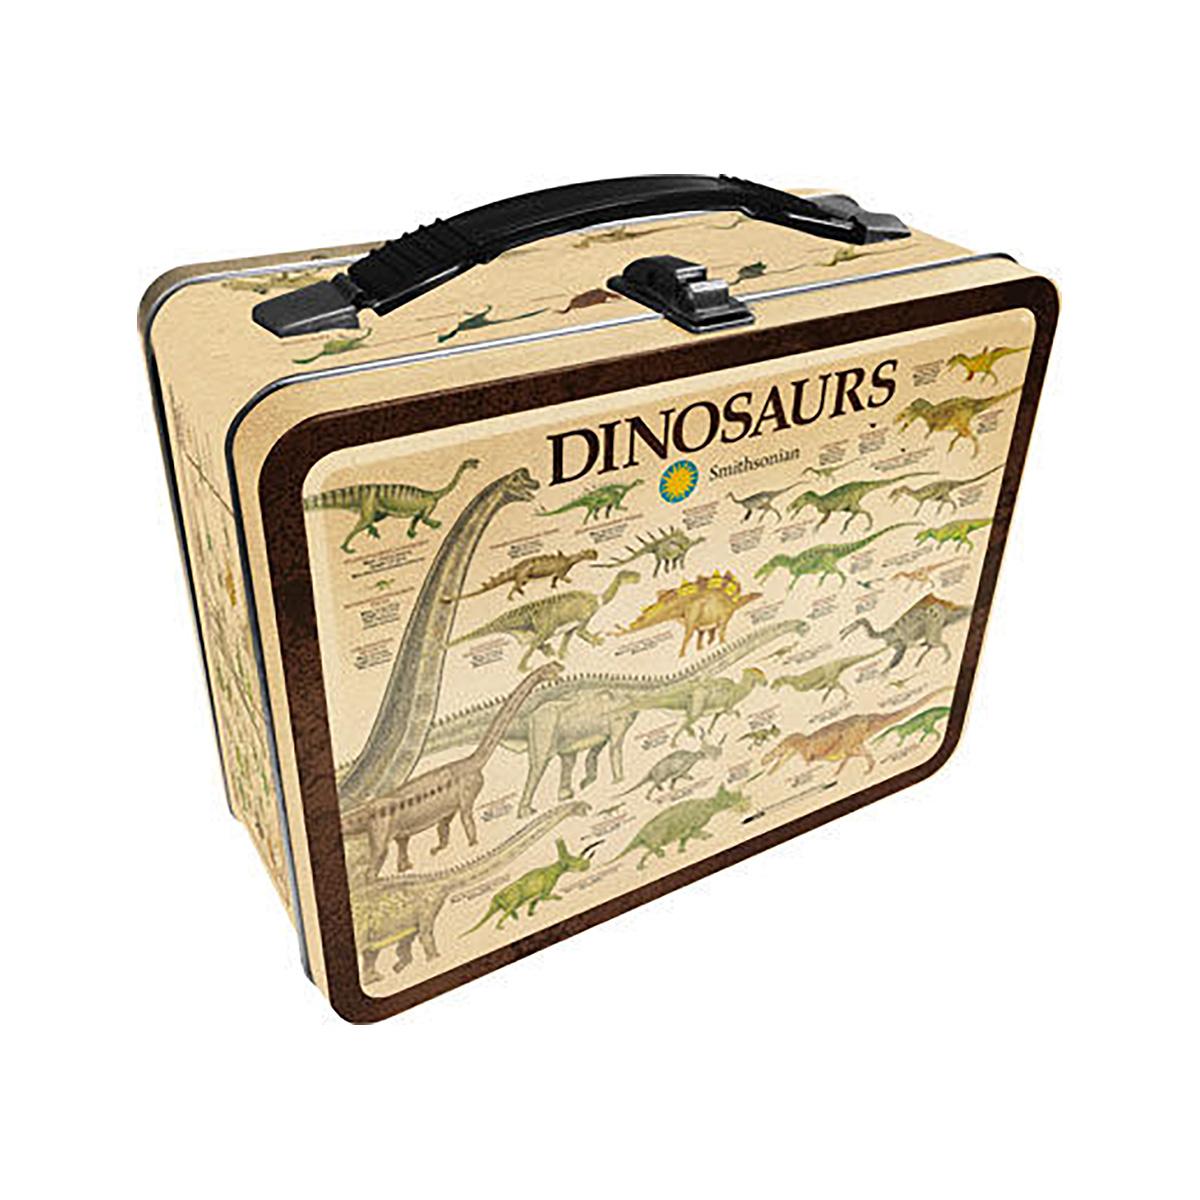 dinosaur lunch box